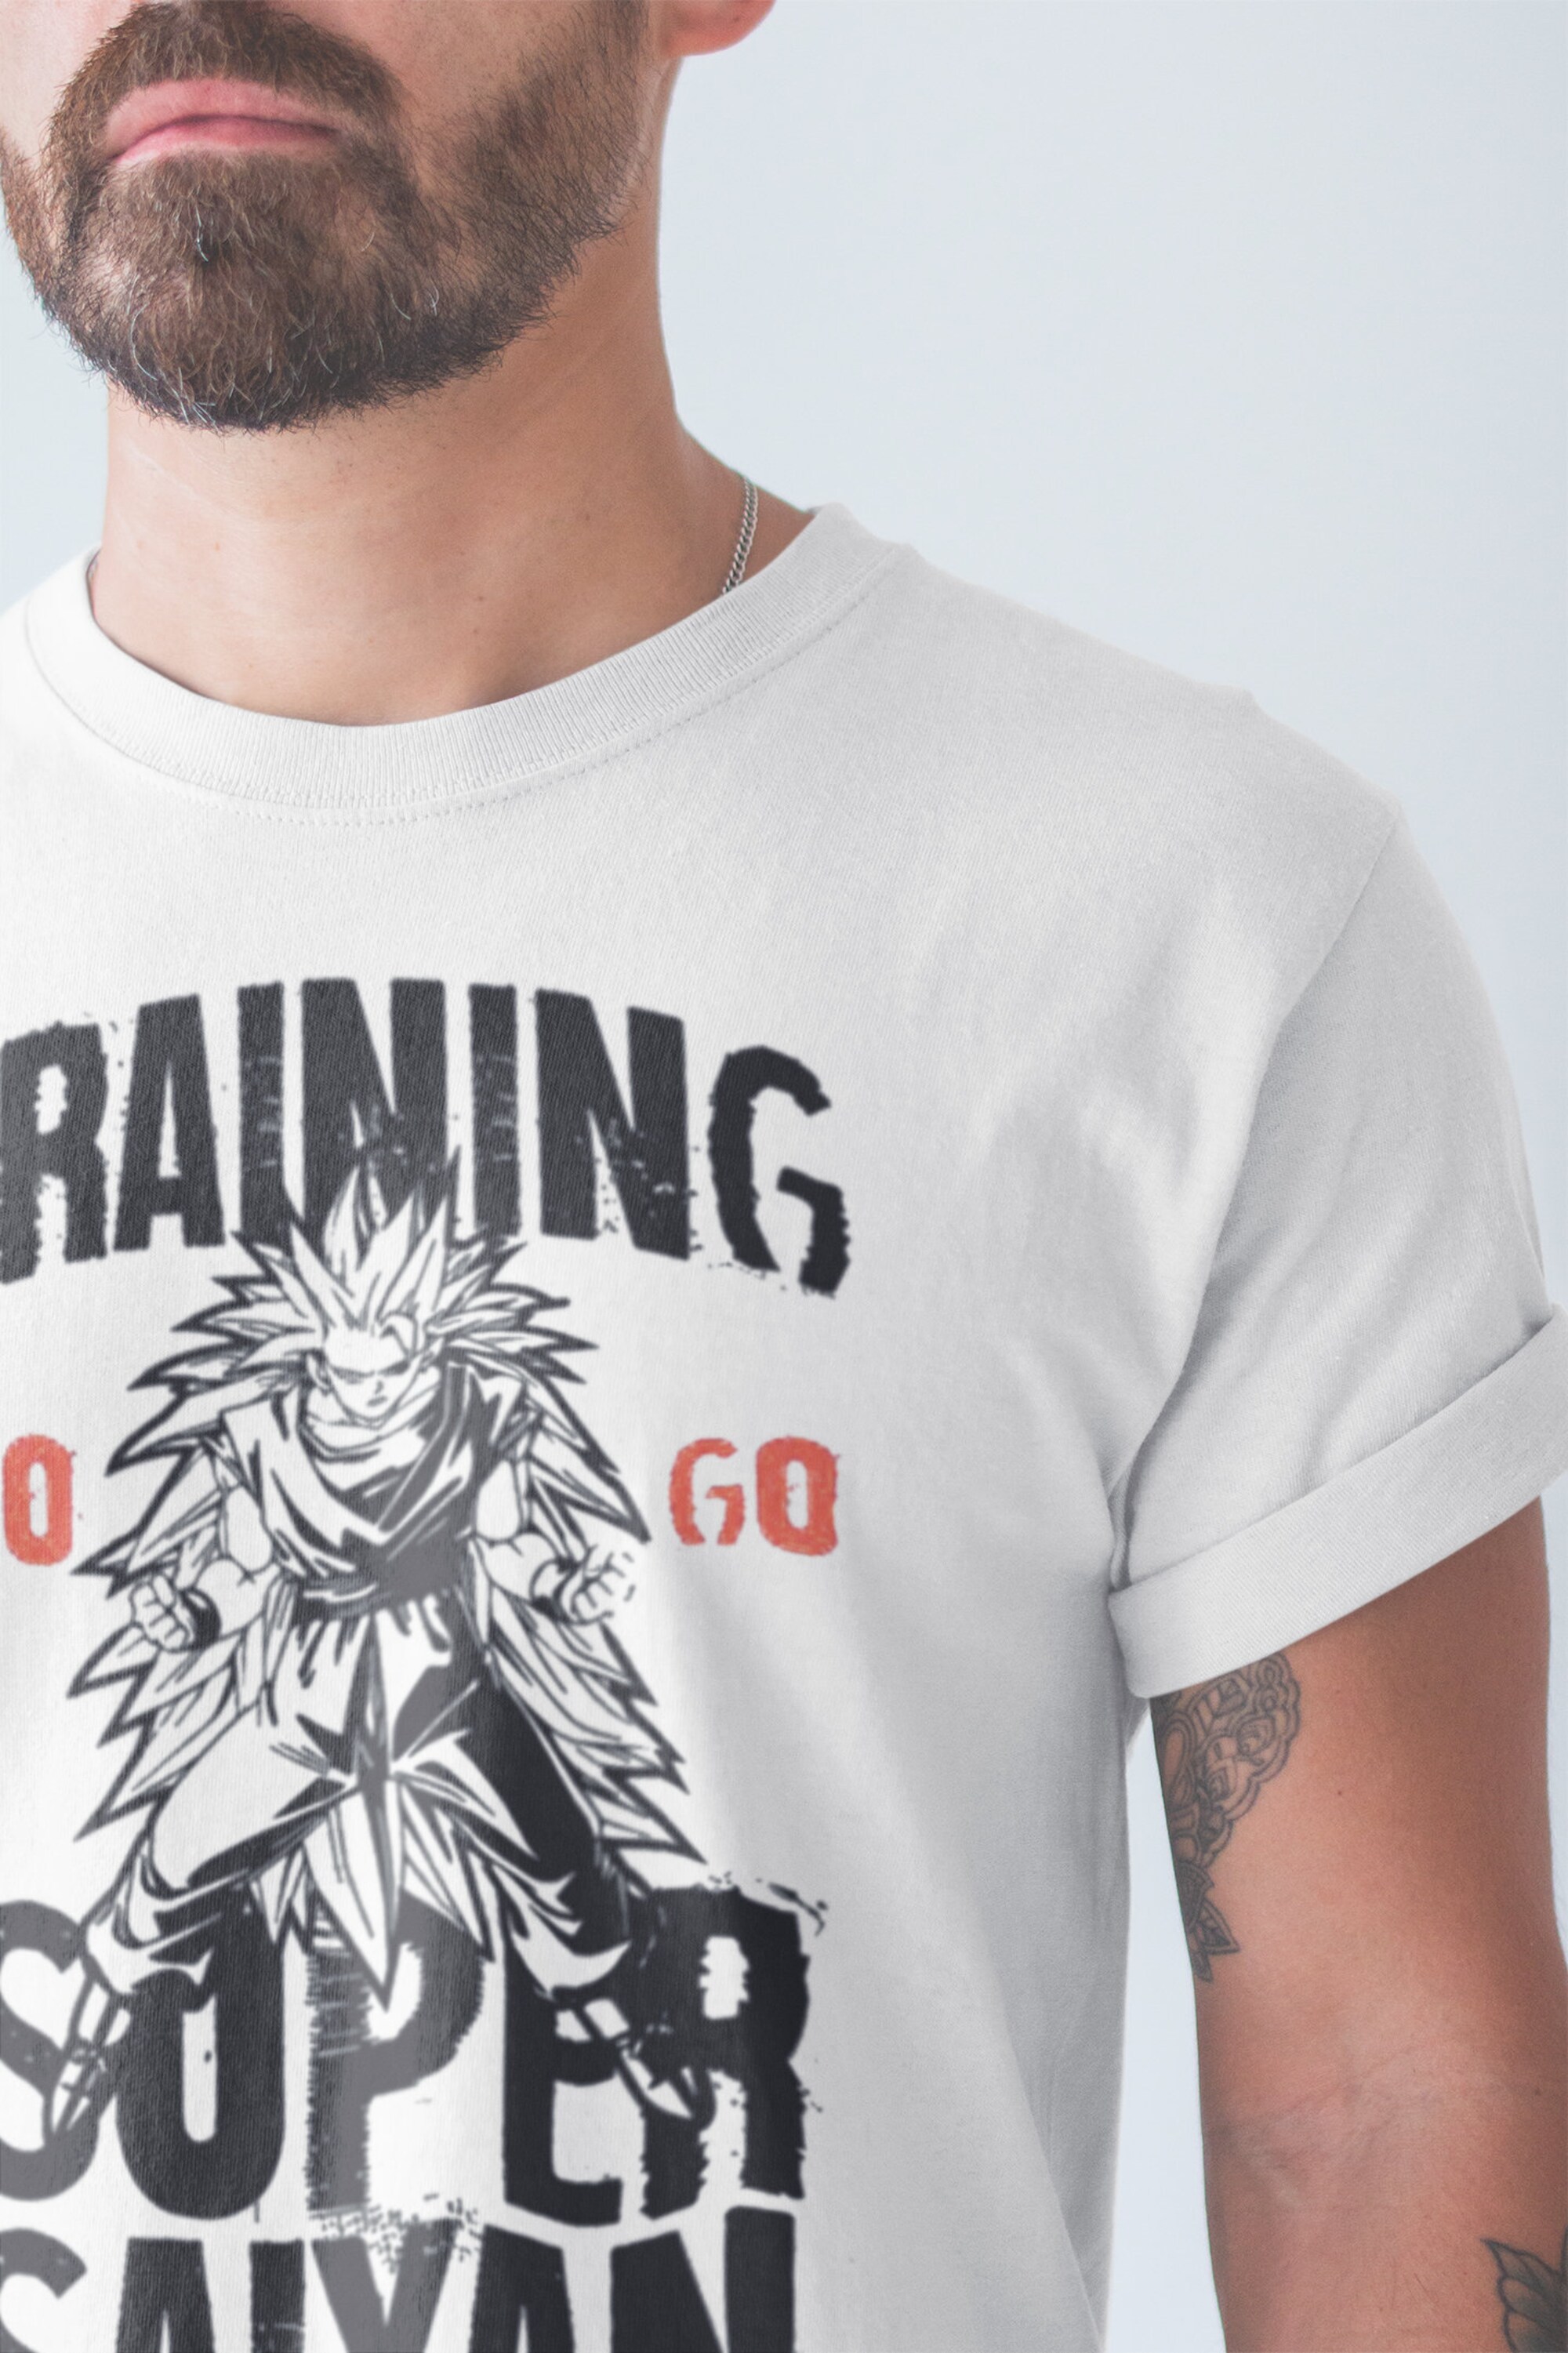 Training To Go Super Saiyan T Shirt Gym Goku Dragon Ball Z Gt Crossfit